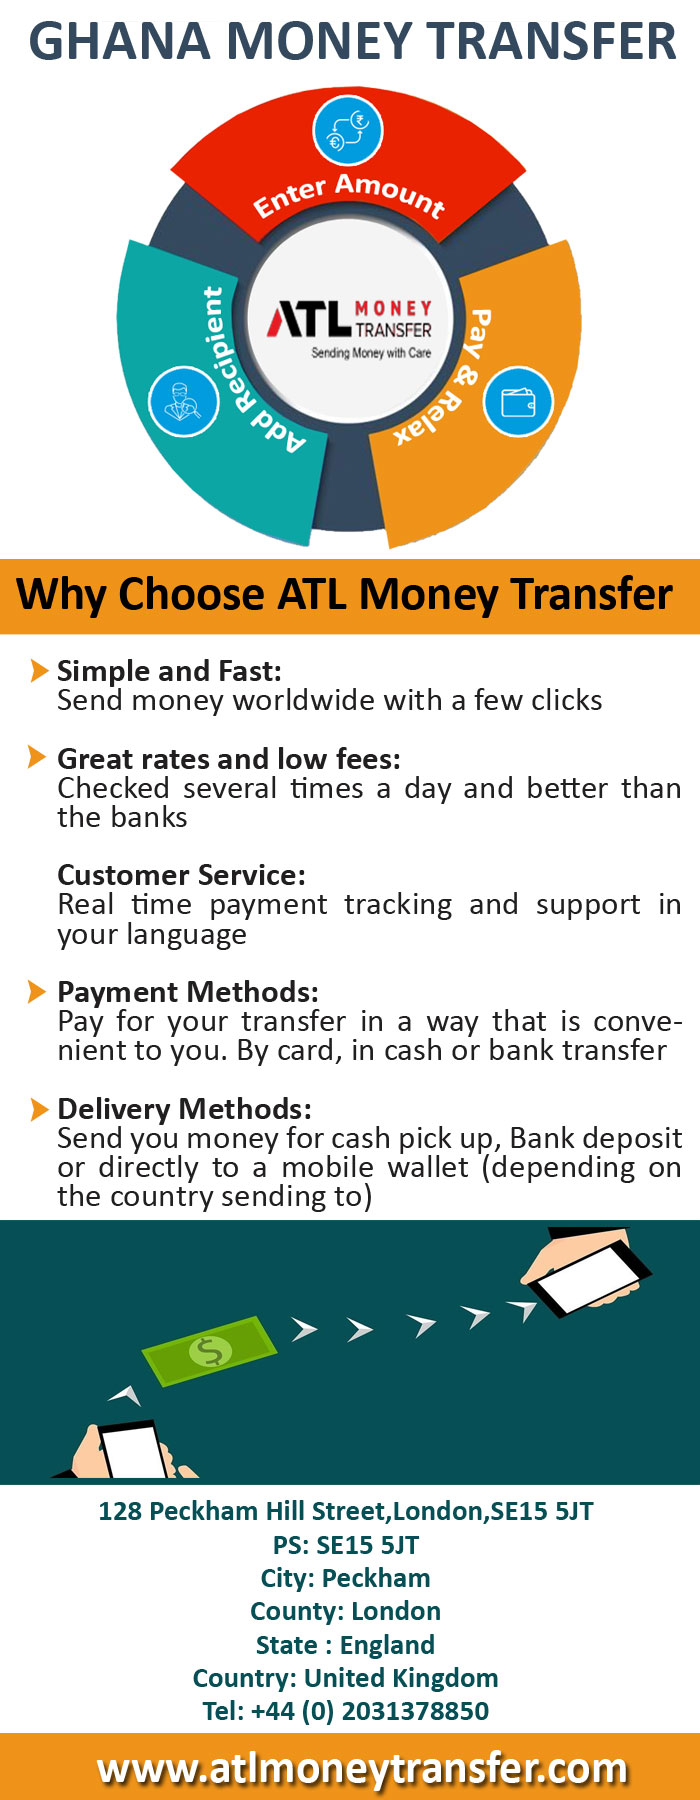 ghana money transfer.jpg  by atlmoneytransfer